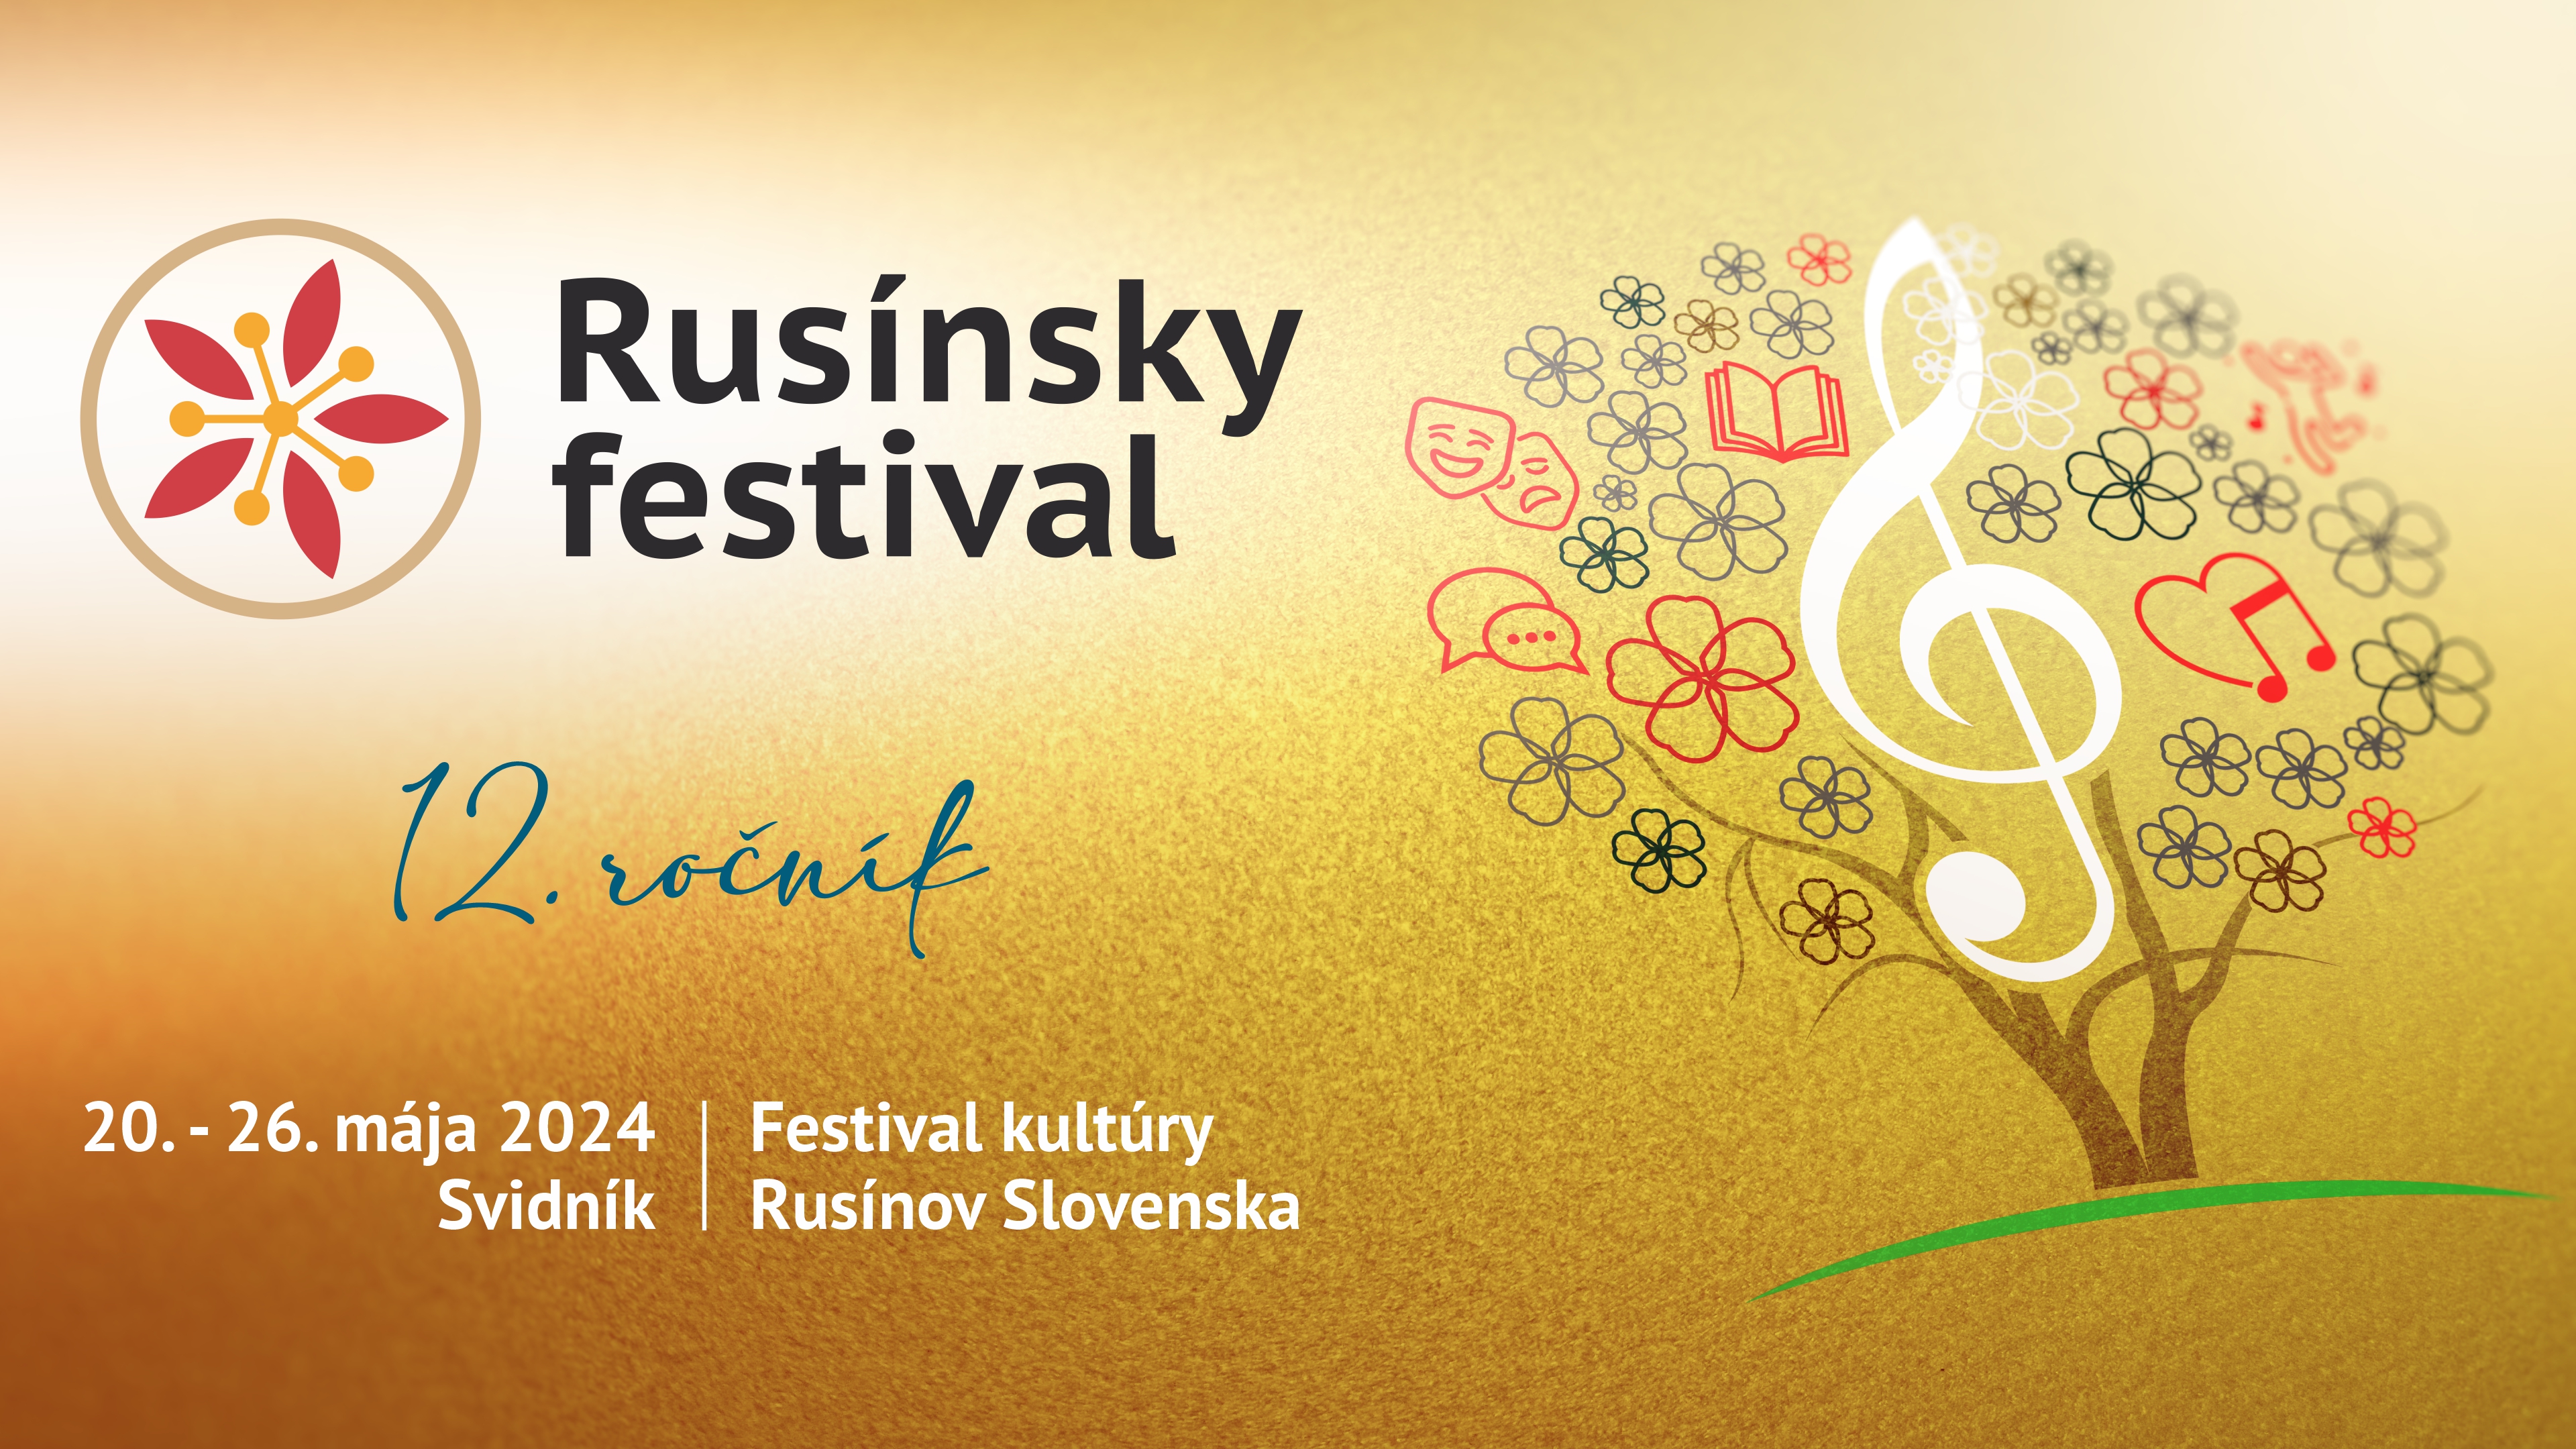 Rusinsky_ festival_20.-26.5.2024